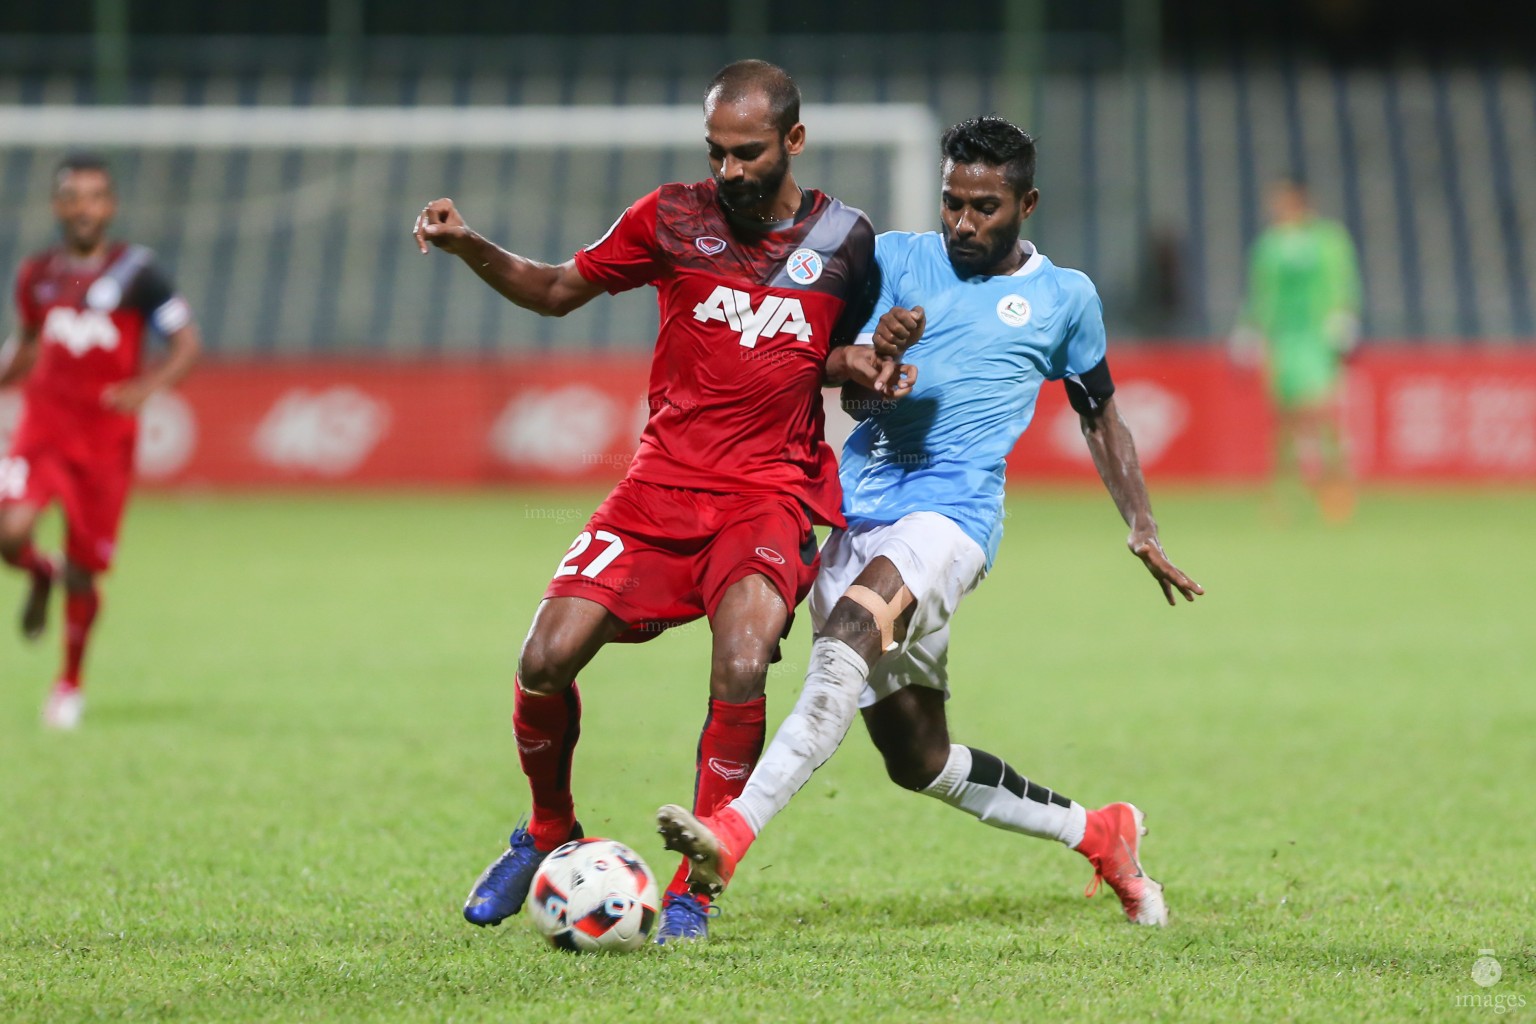 Ooredoo Dhivehi Premier League 2017, Milandhoo FC vs Thinadhoo FT 17th September 2017, Male , Maldives. Sunday (images.mv Photos /Abdulla Abeedh)